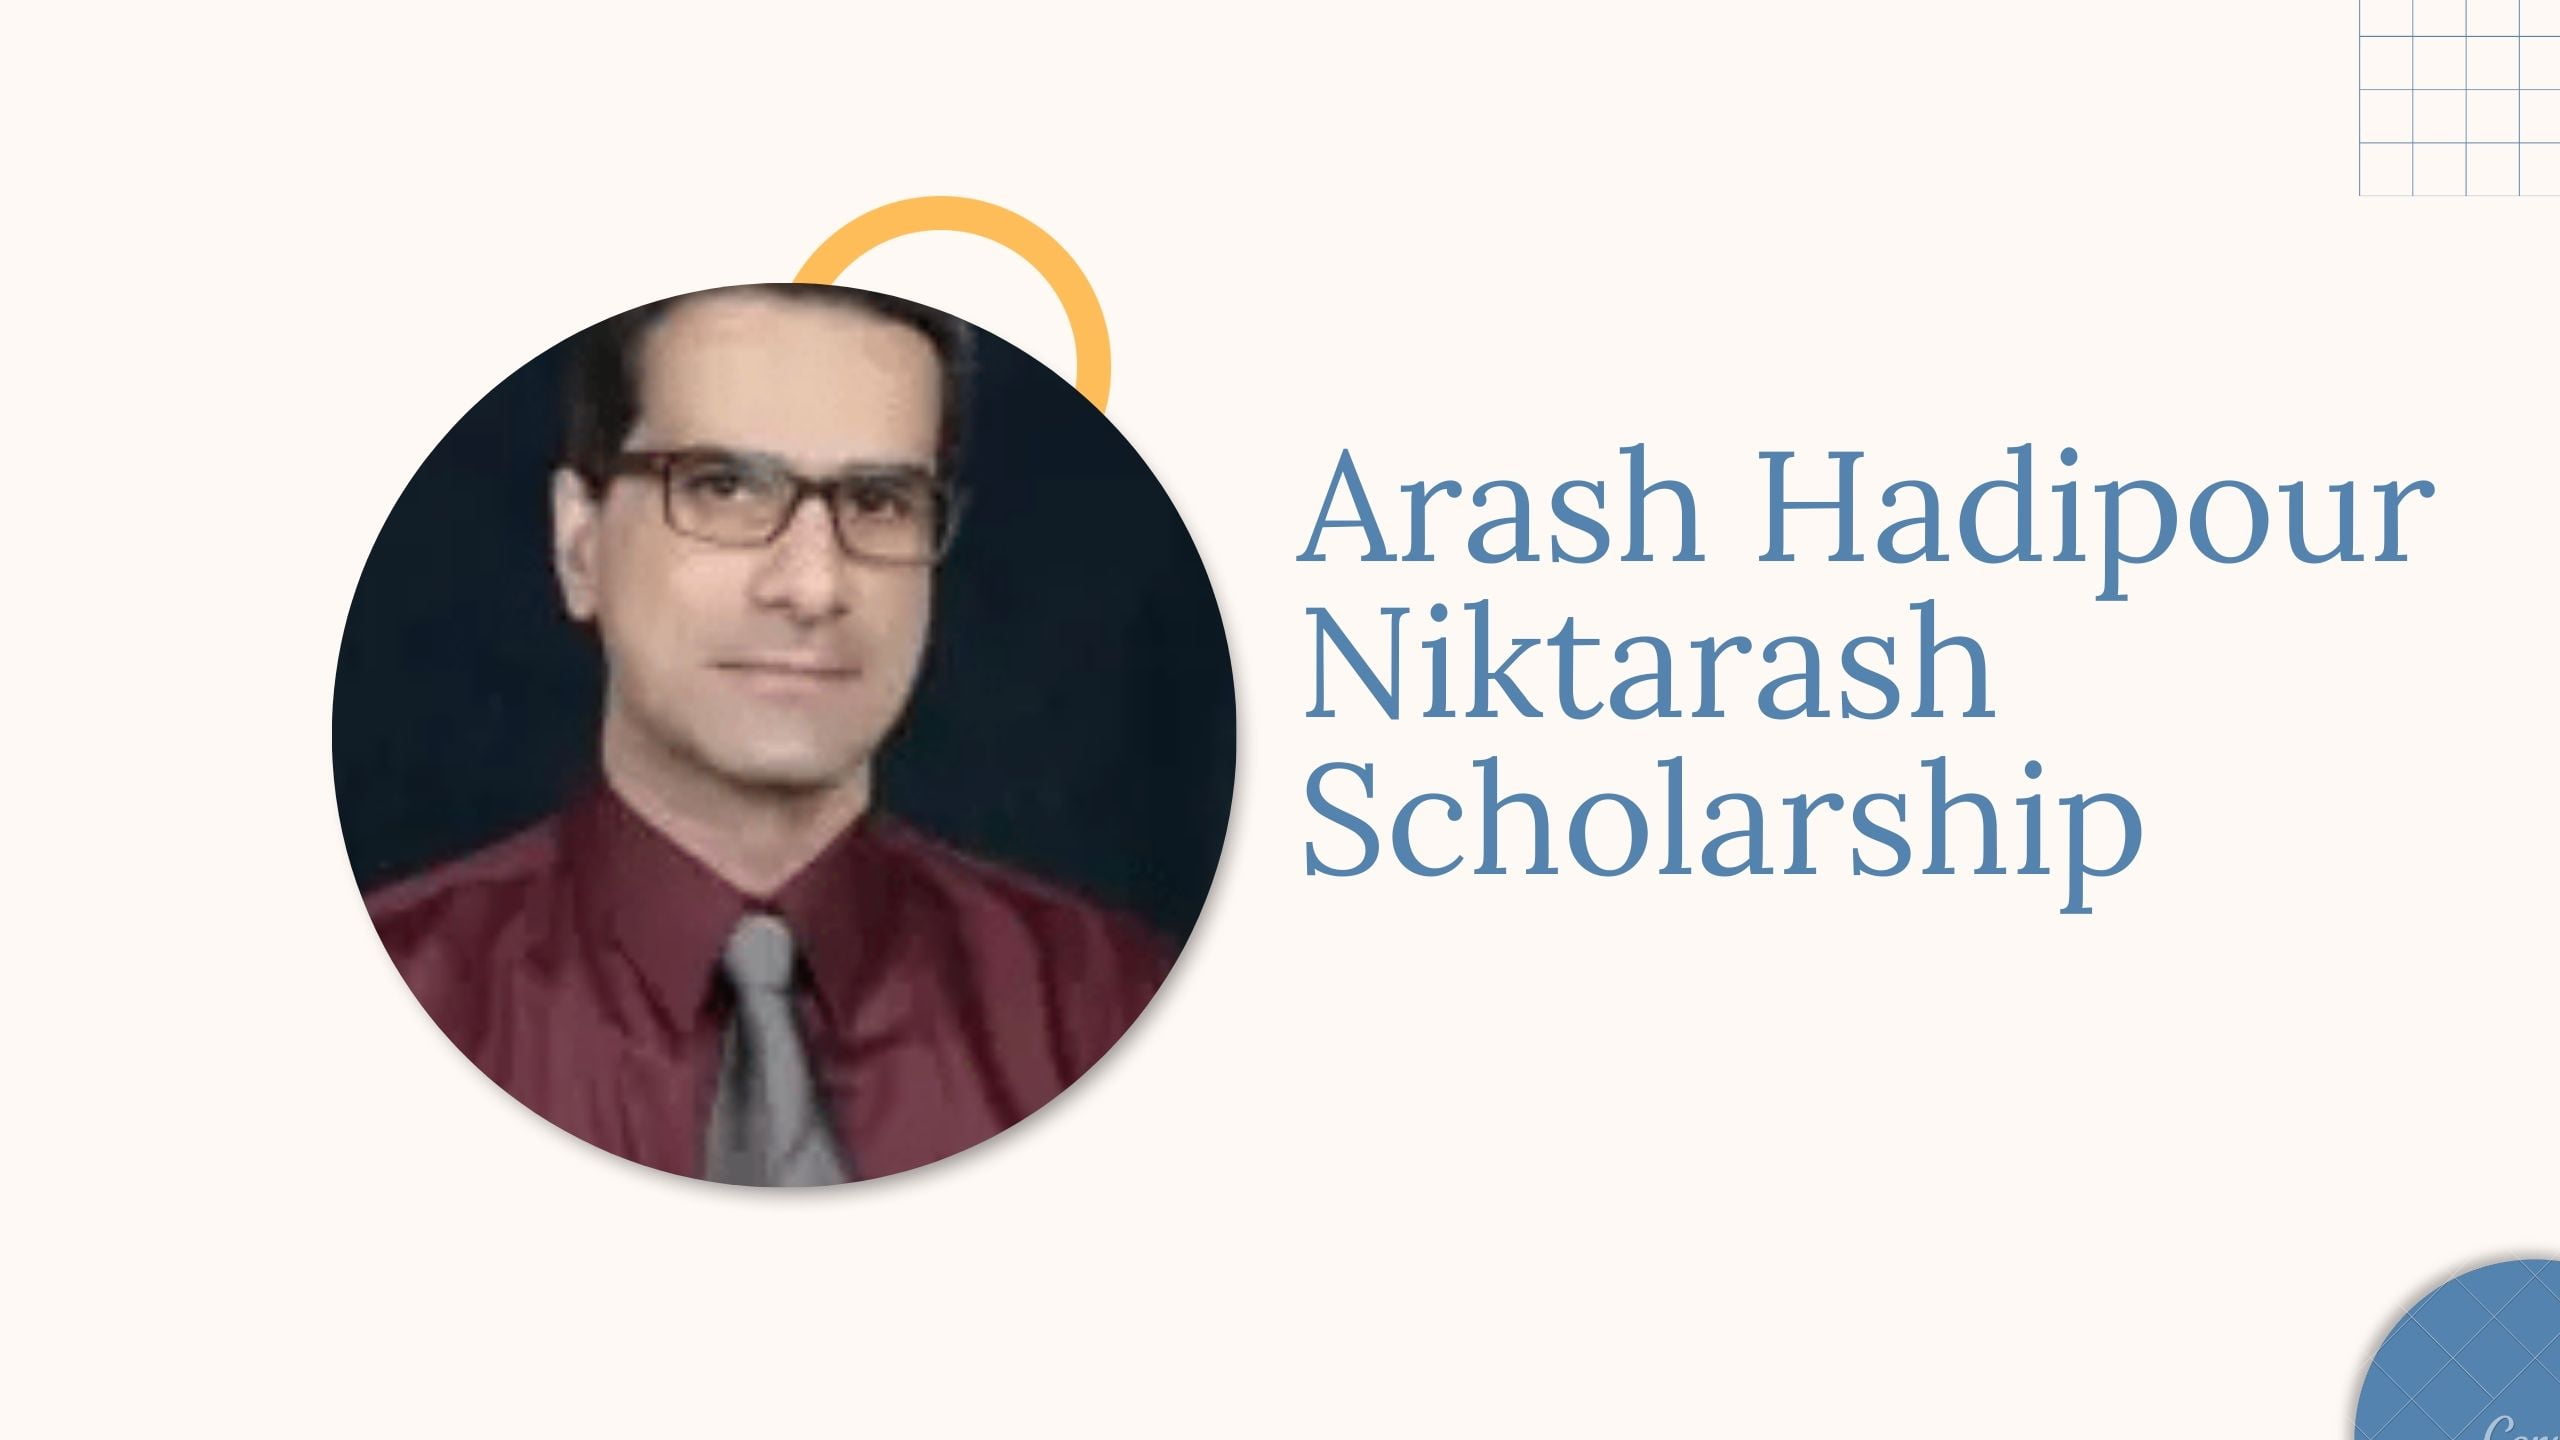 Arash Hadipour Niktarash Scholarship - Best Way To Apply 2023/2024